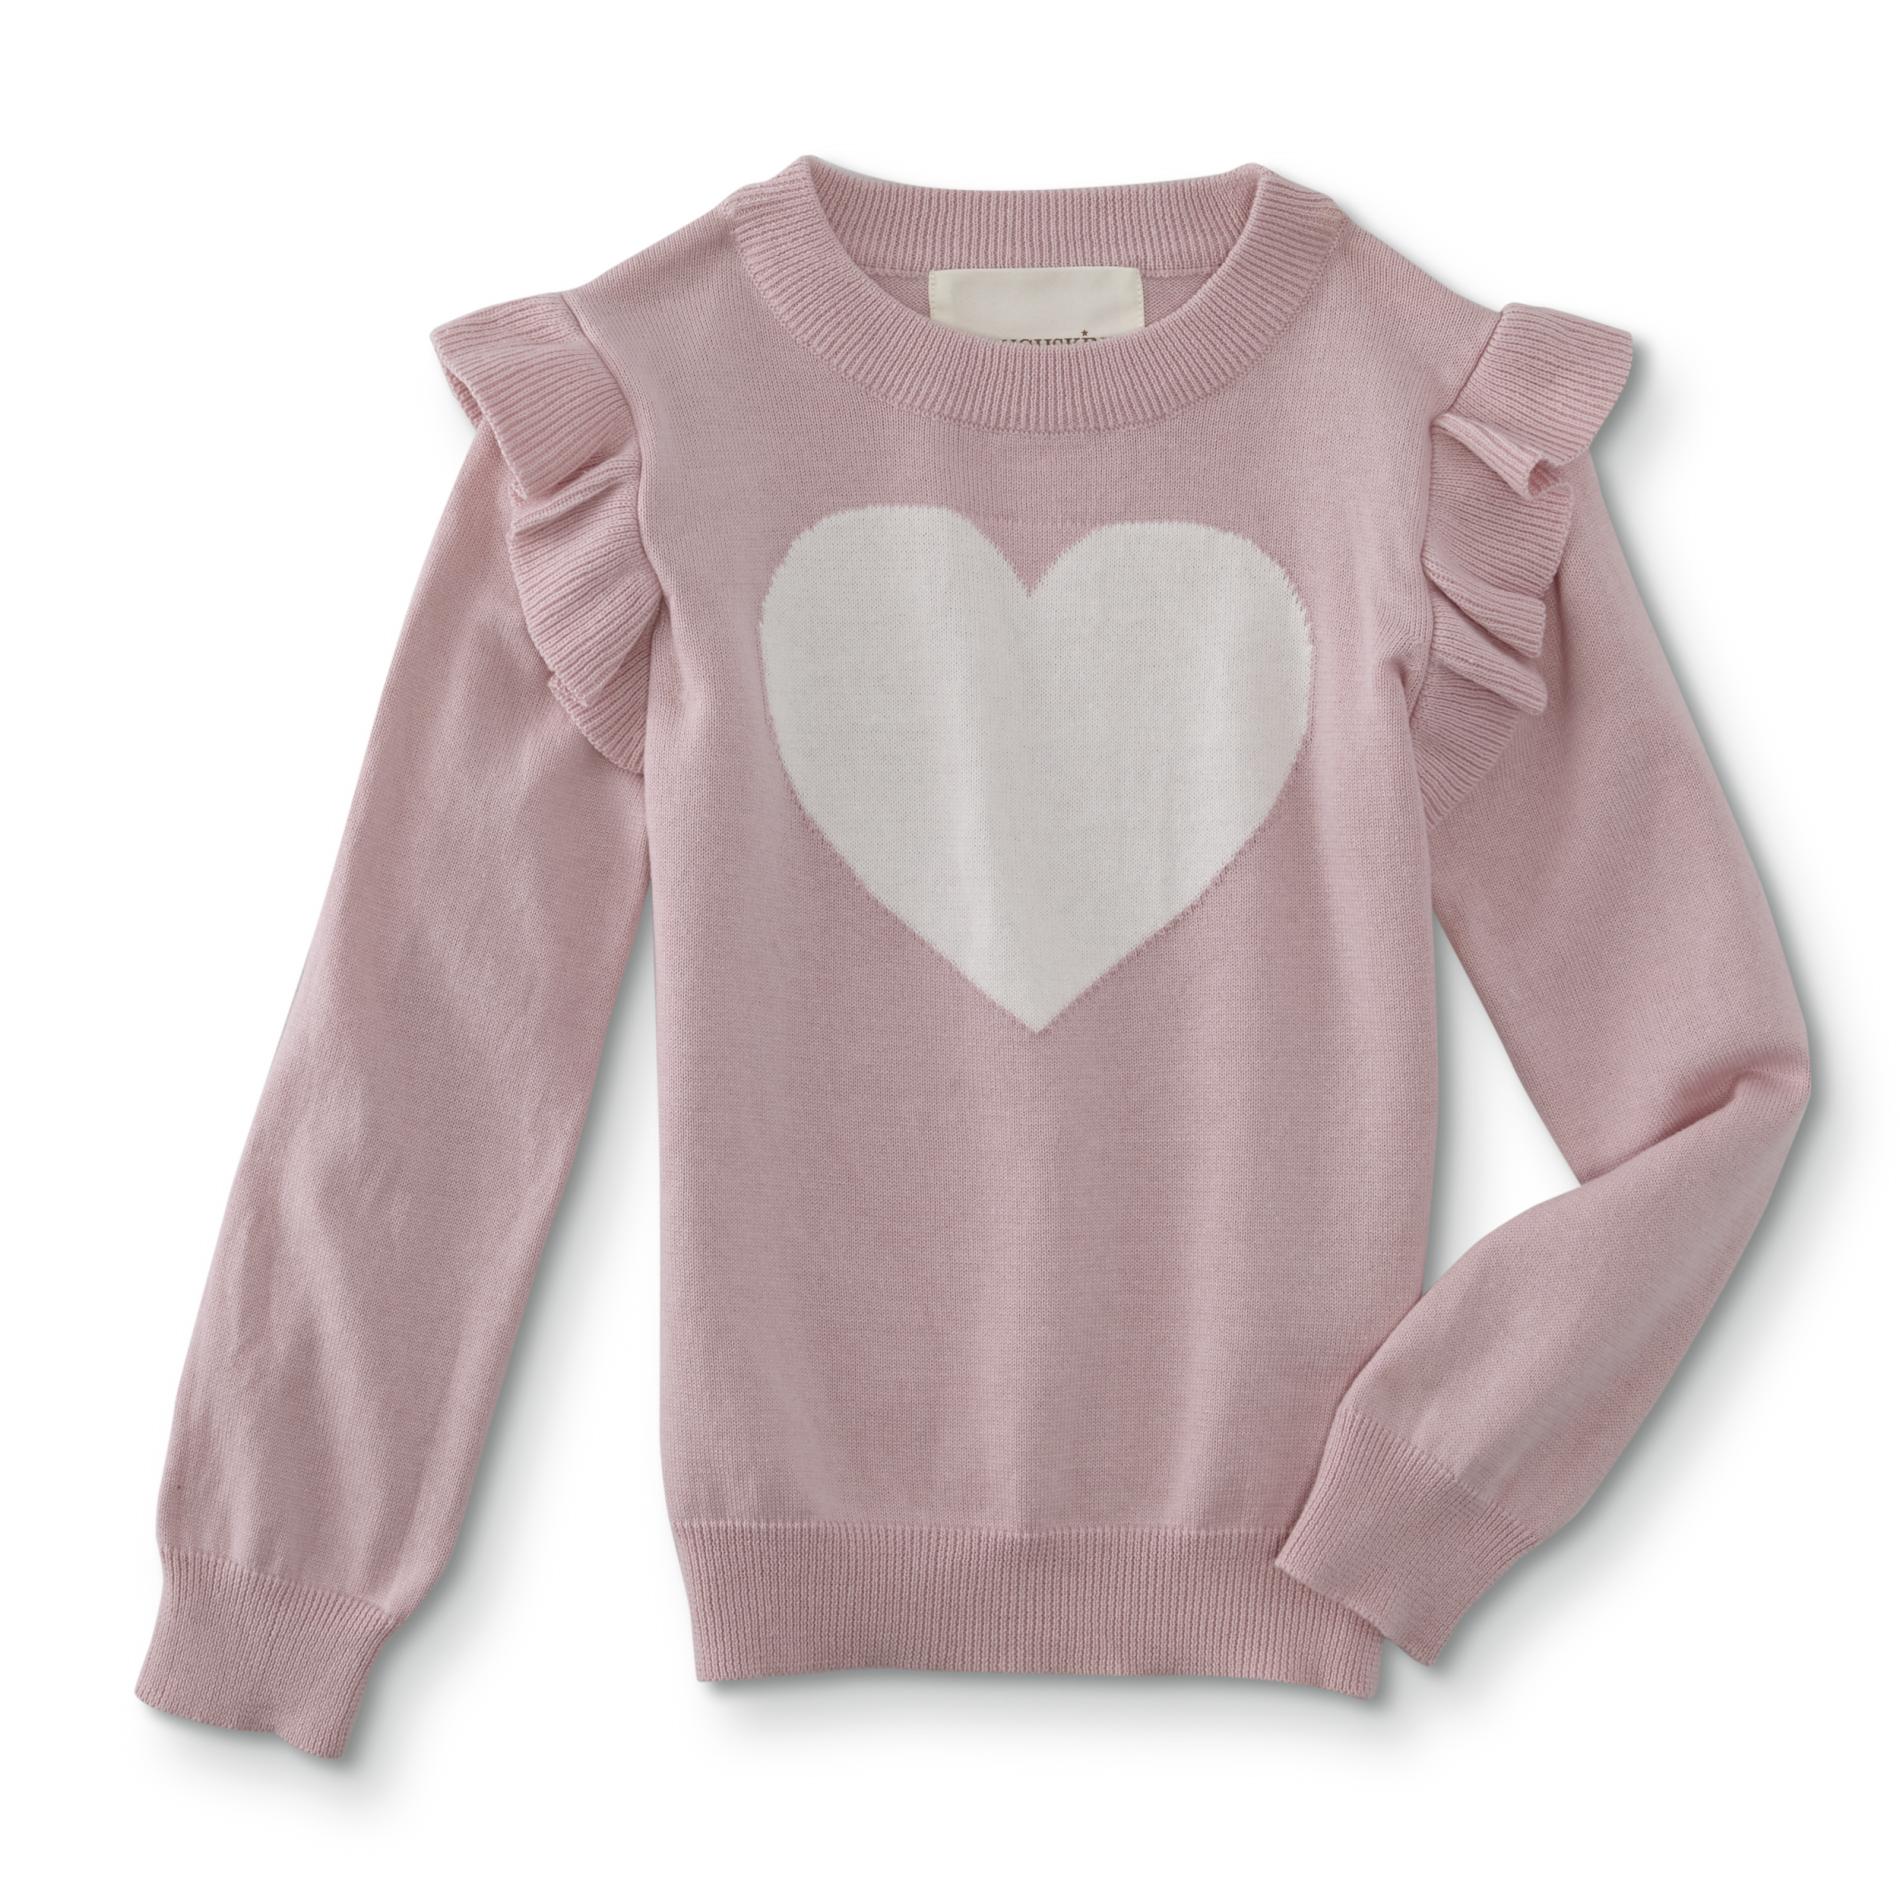 Toughskins Girls' Embellished Sweater - Heart